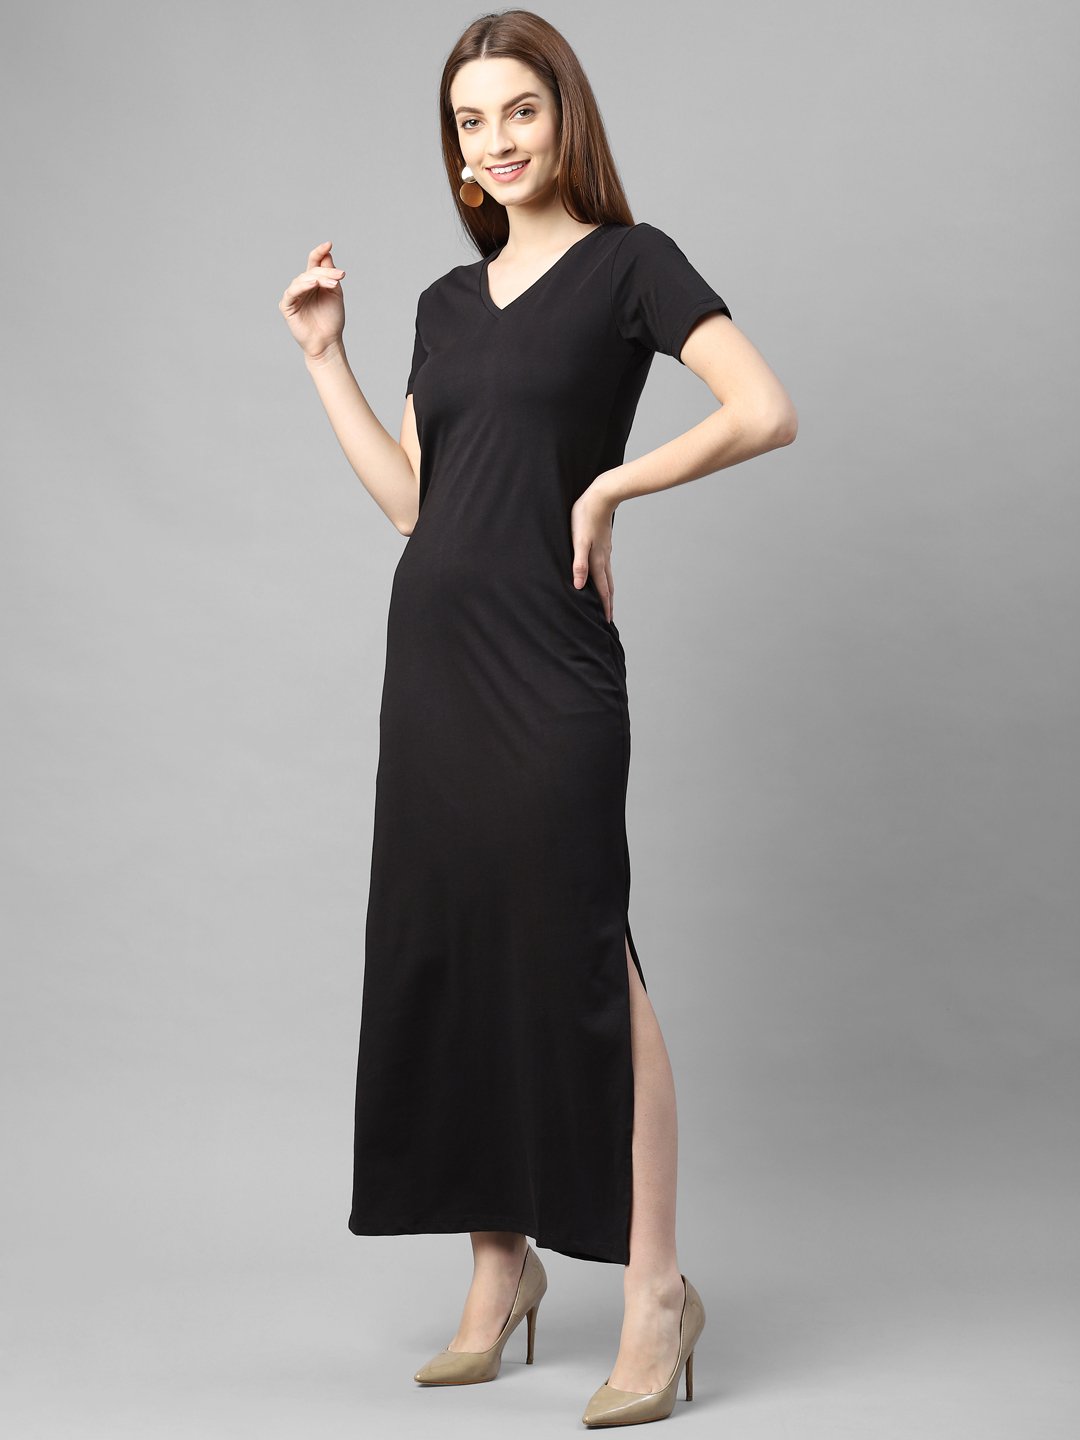 SHEIN | Dresses | Shein Grey And Black Half And Half Dress In An Xl |  Poshmark